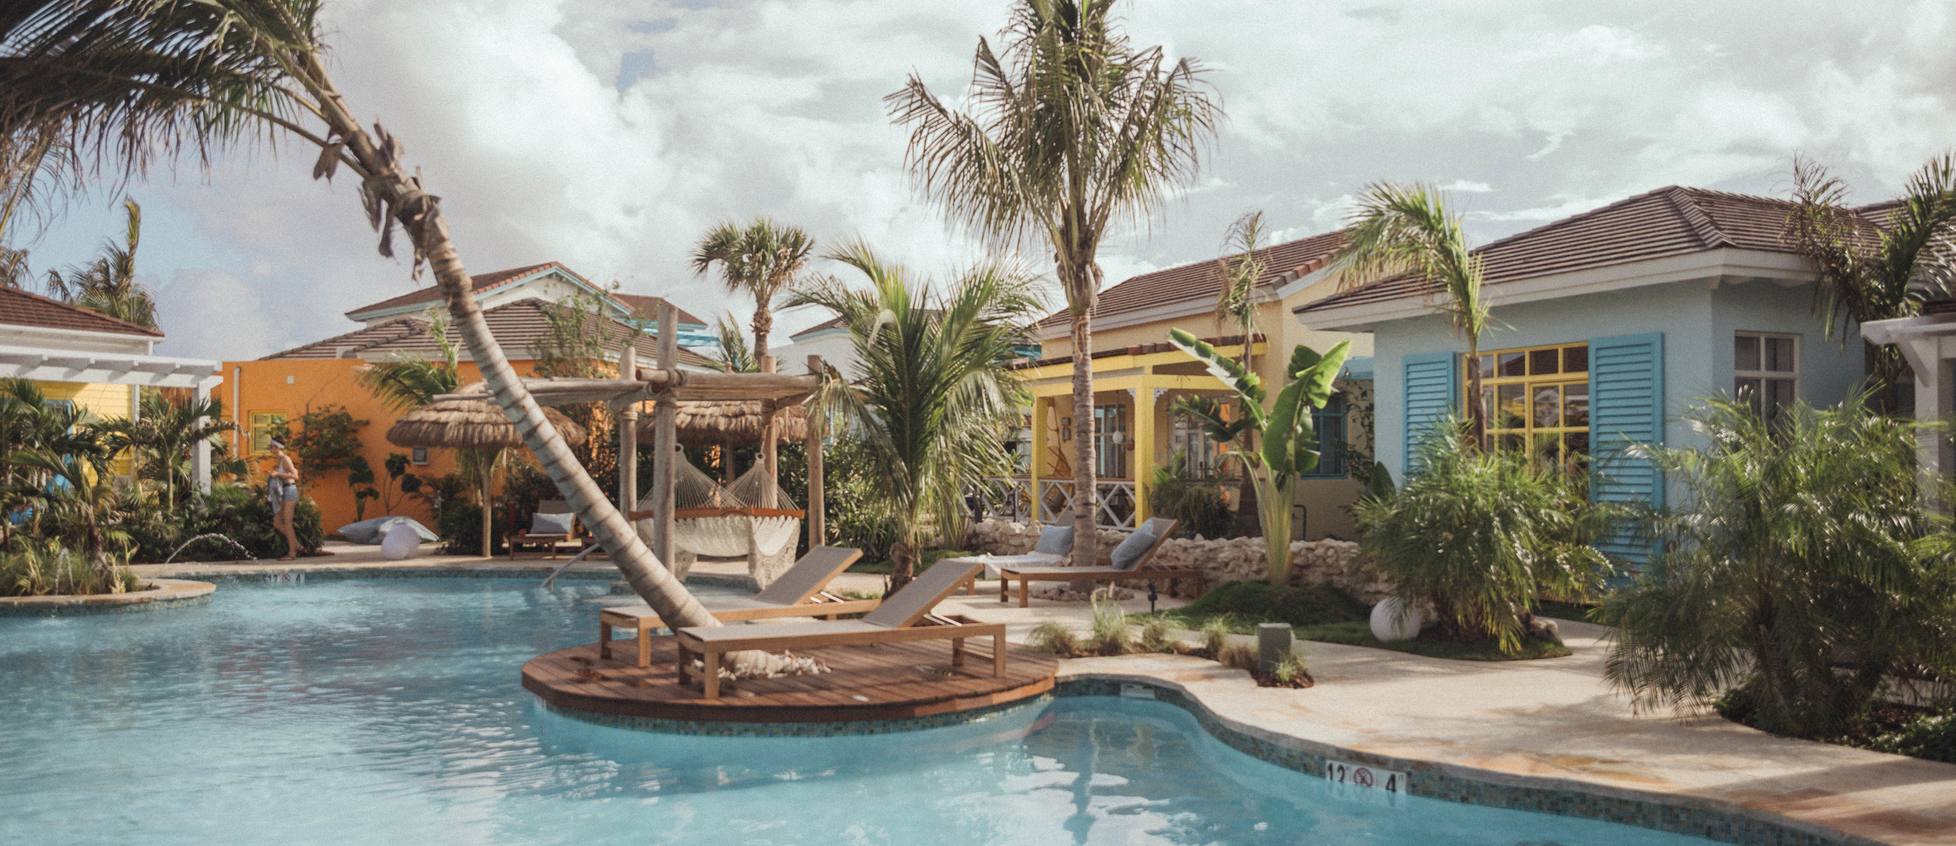 Boardwalk Boutique Hotel Aruba Swimming Pool